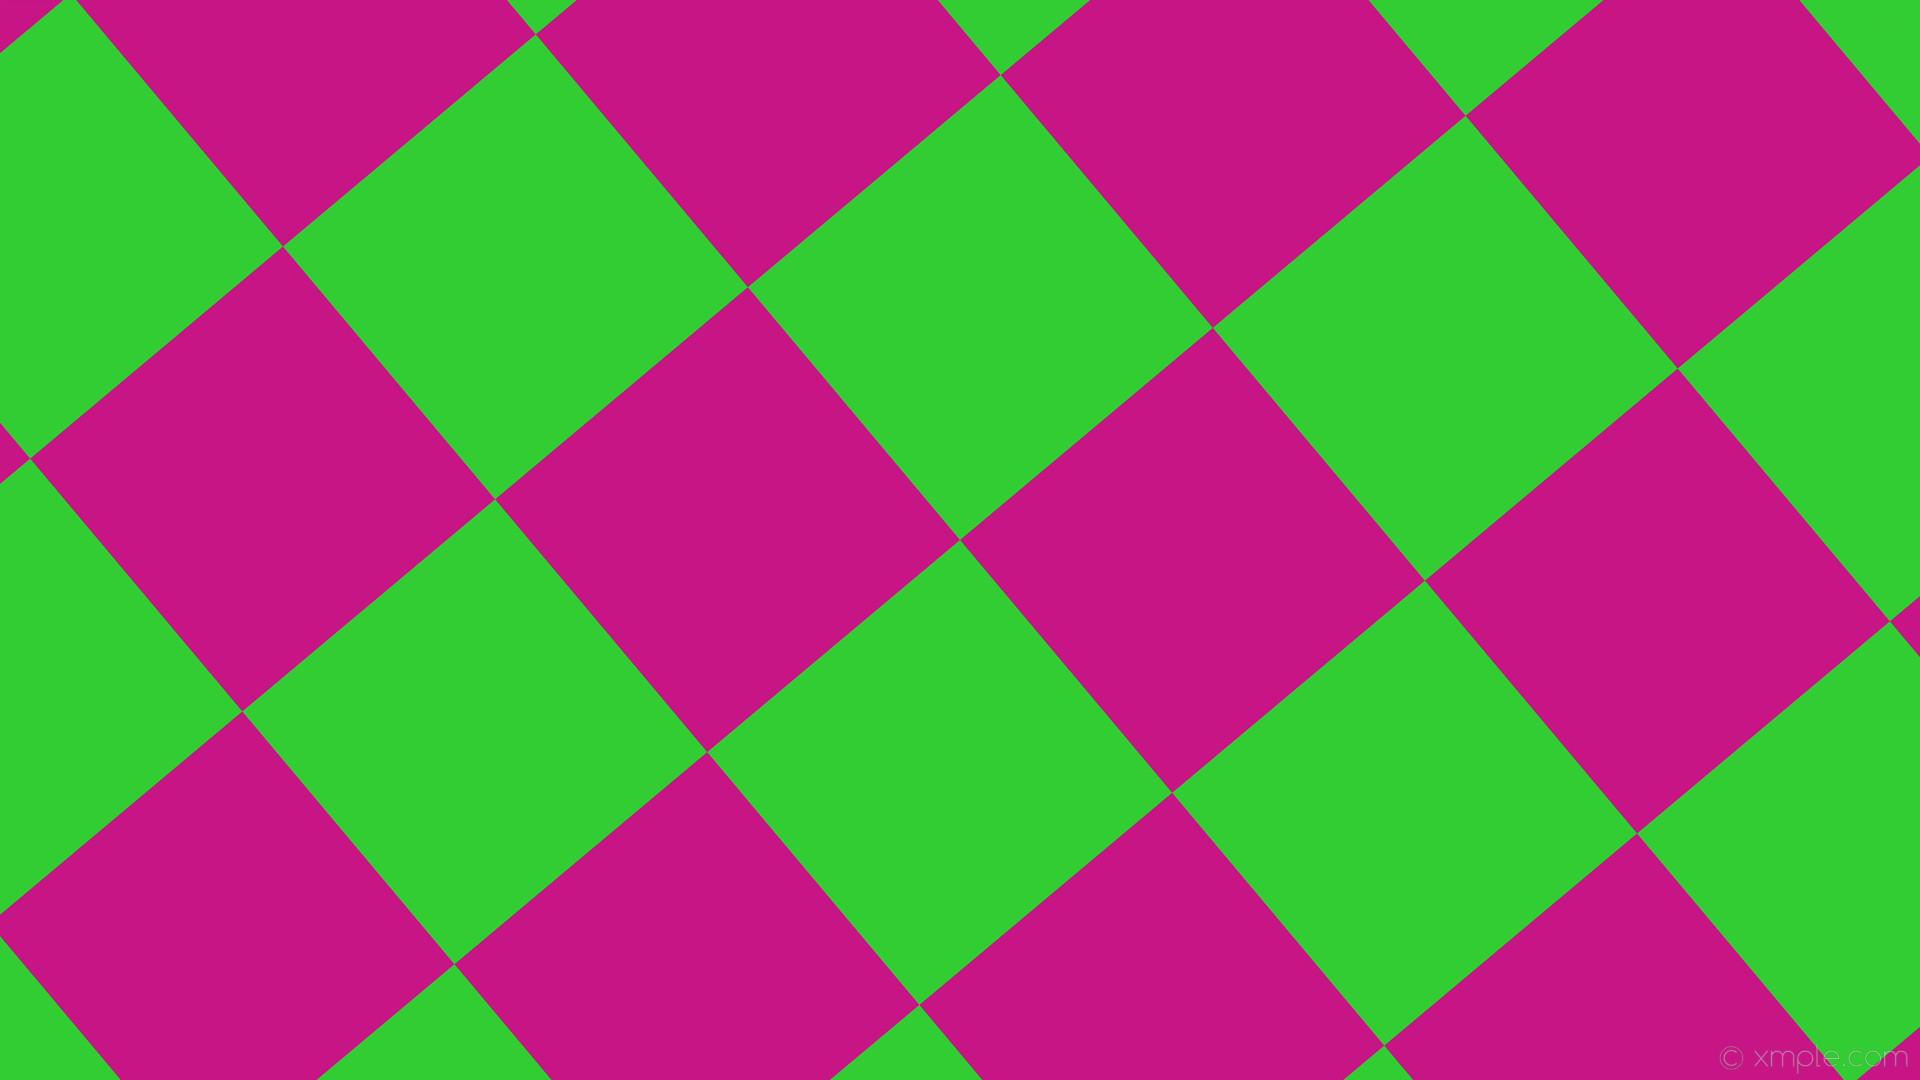 1920x1080 wallpaper squares checkered pink green medium violet red lime green #c71585  #32cd32 diagonal 40